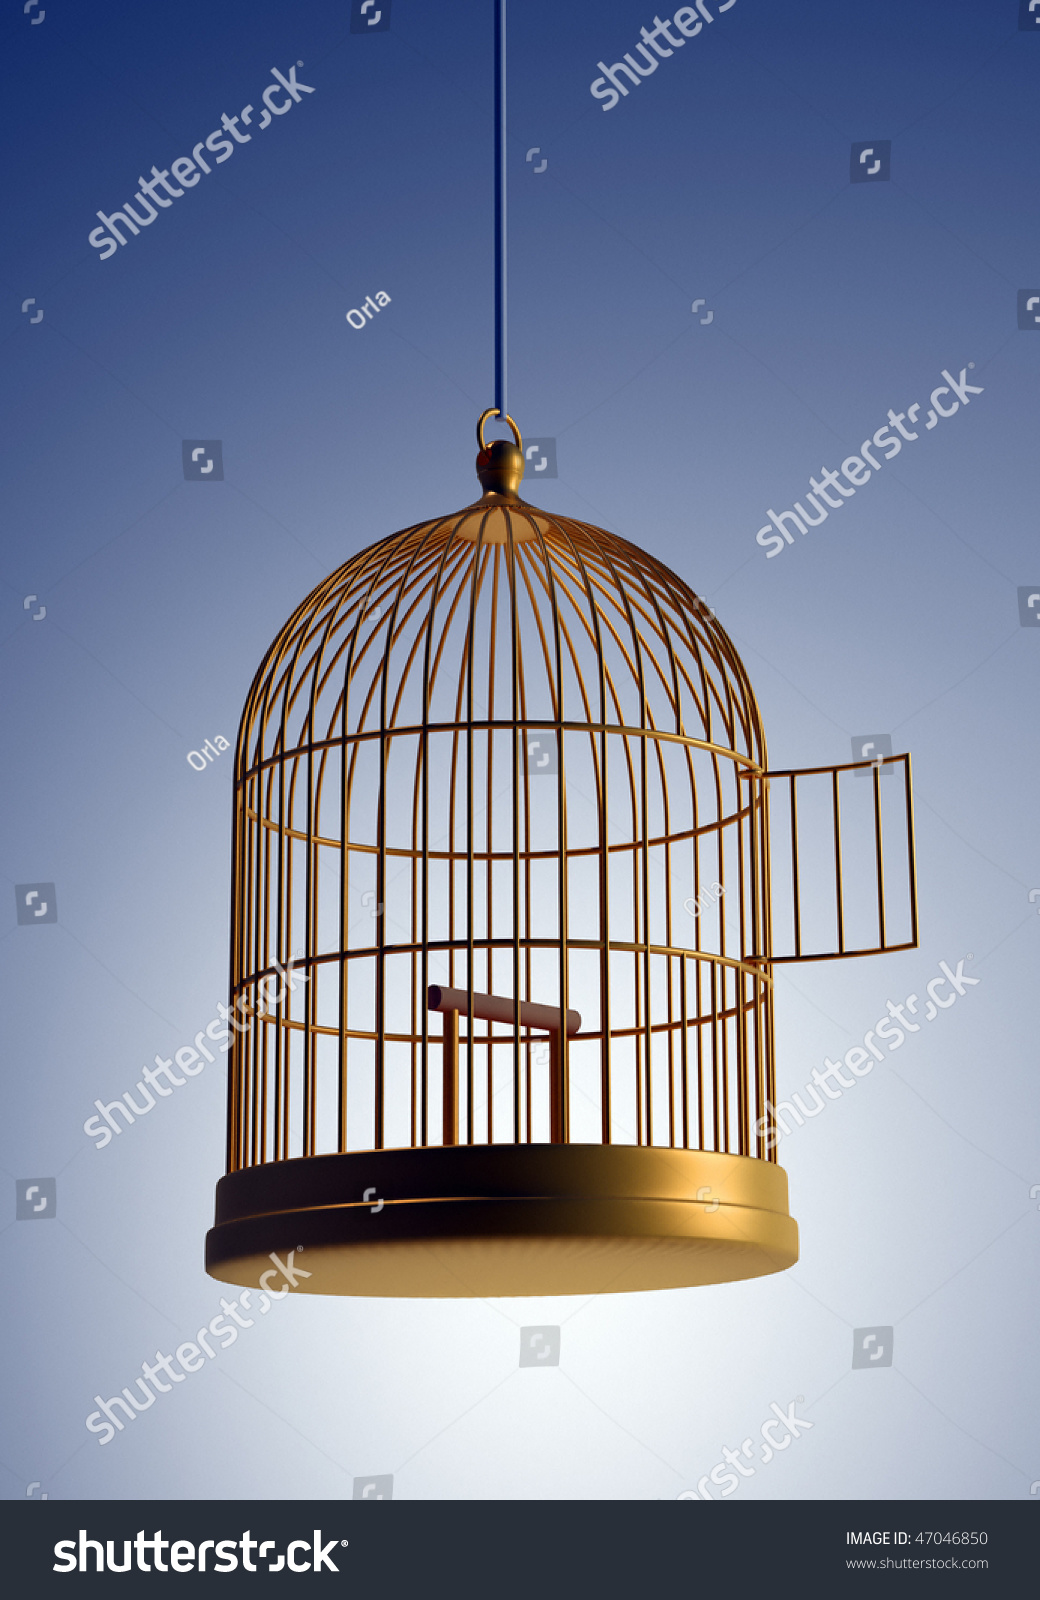 3d Render Illustration Of Golden Bird Cage - 47046850 : Shutterstock